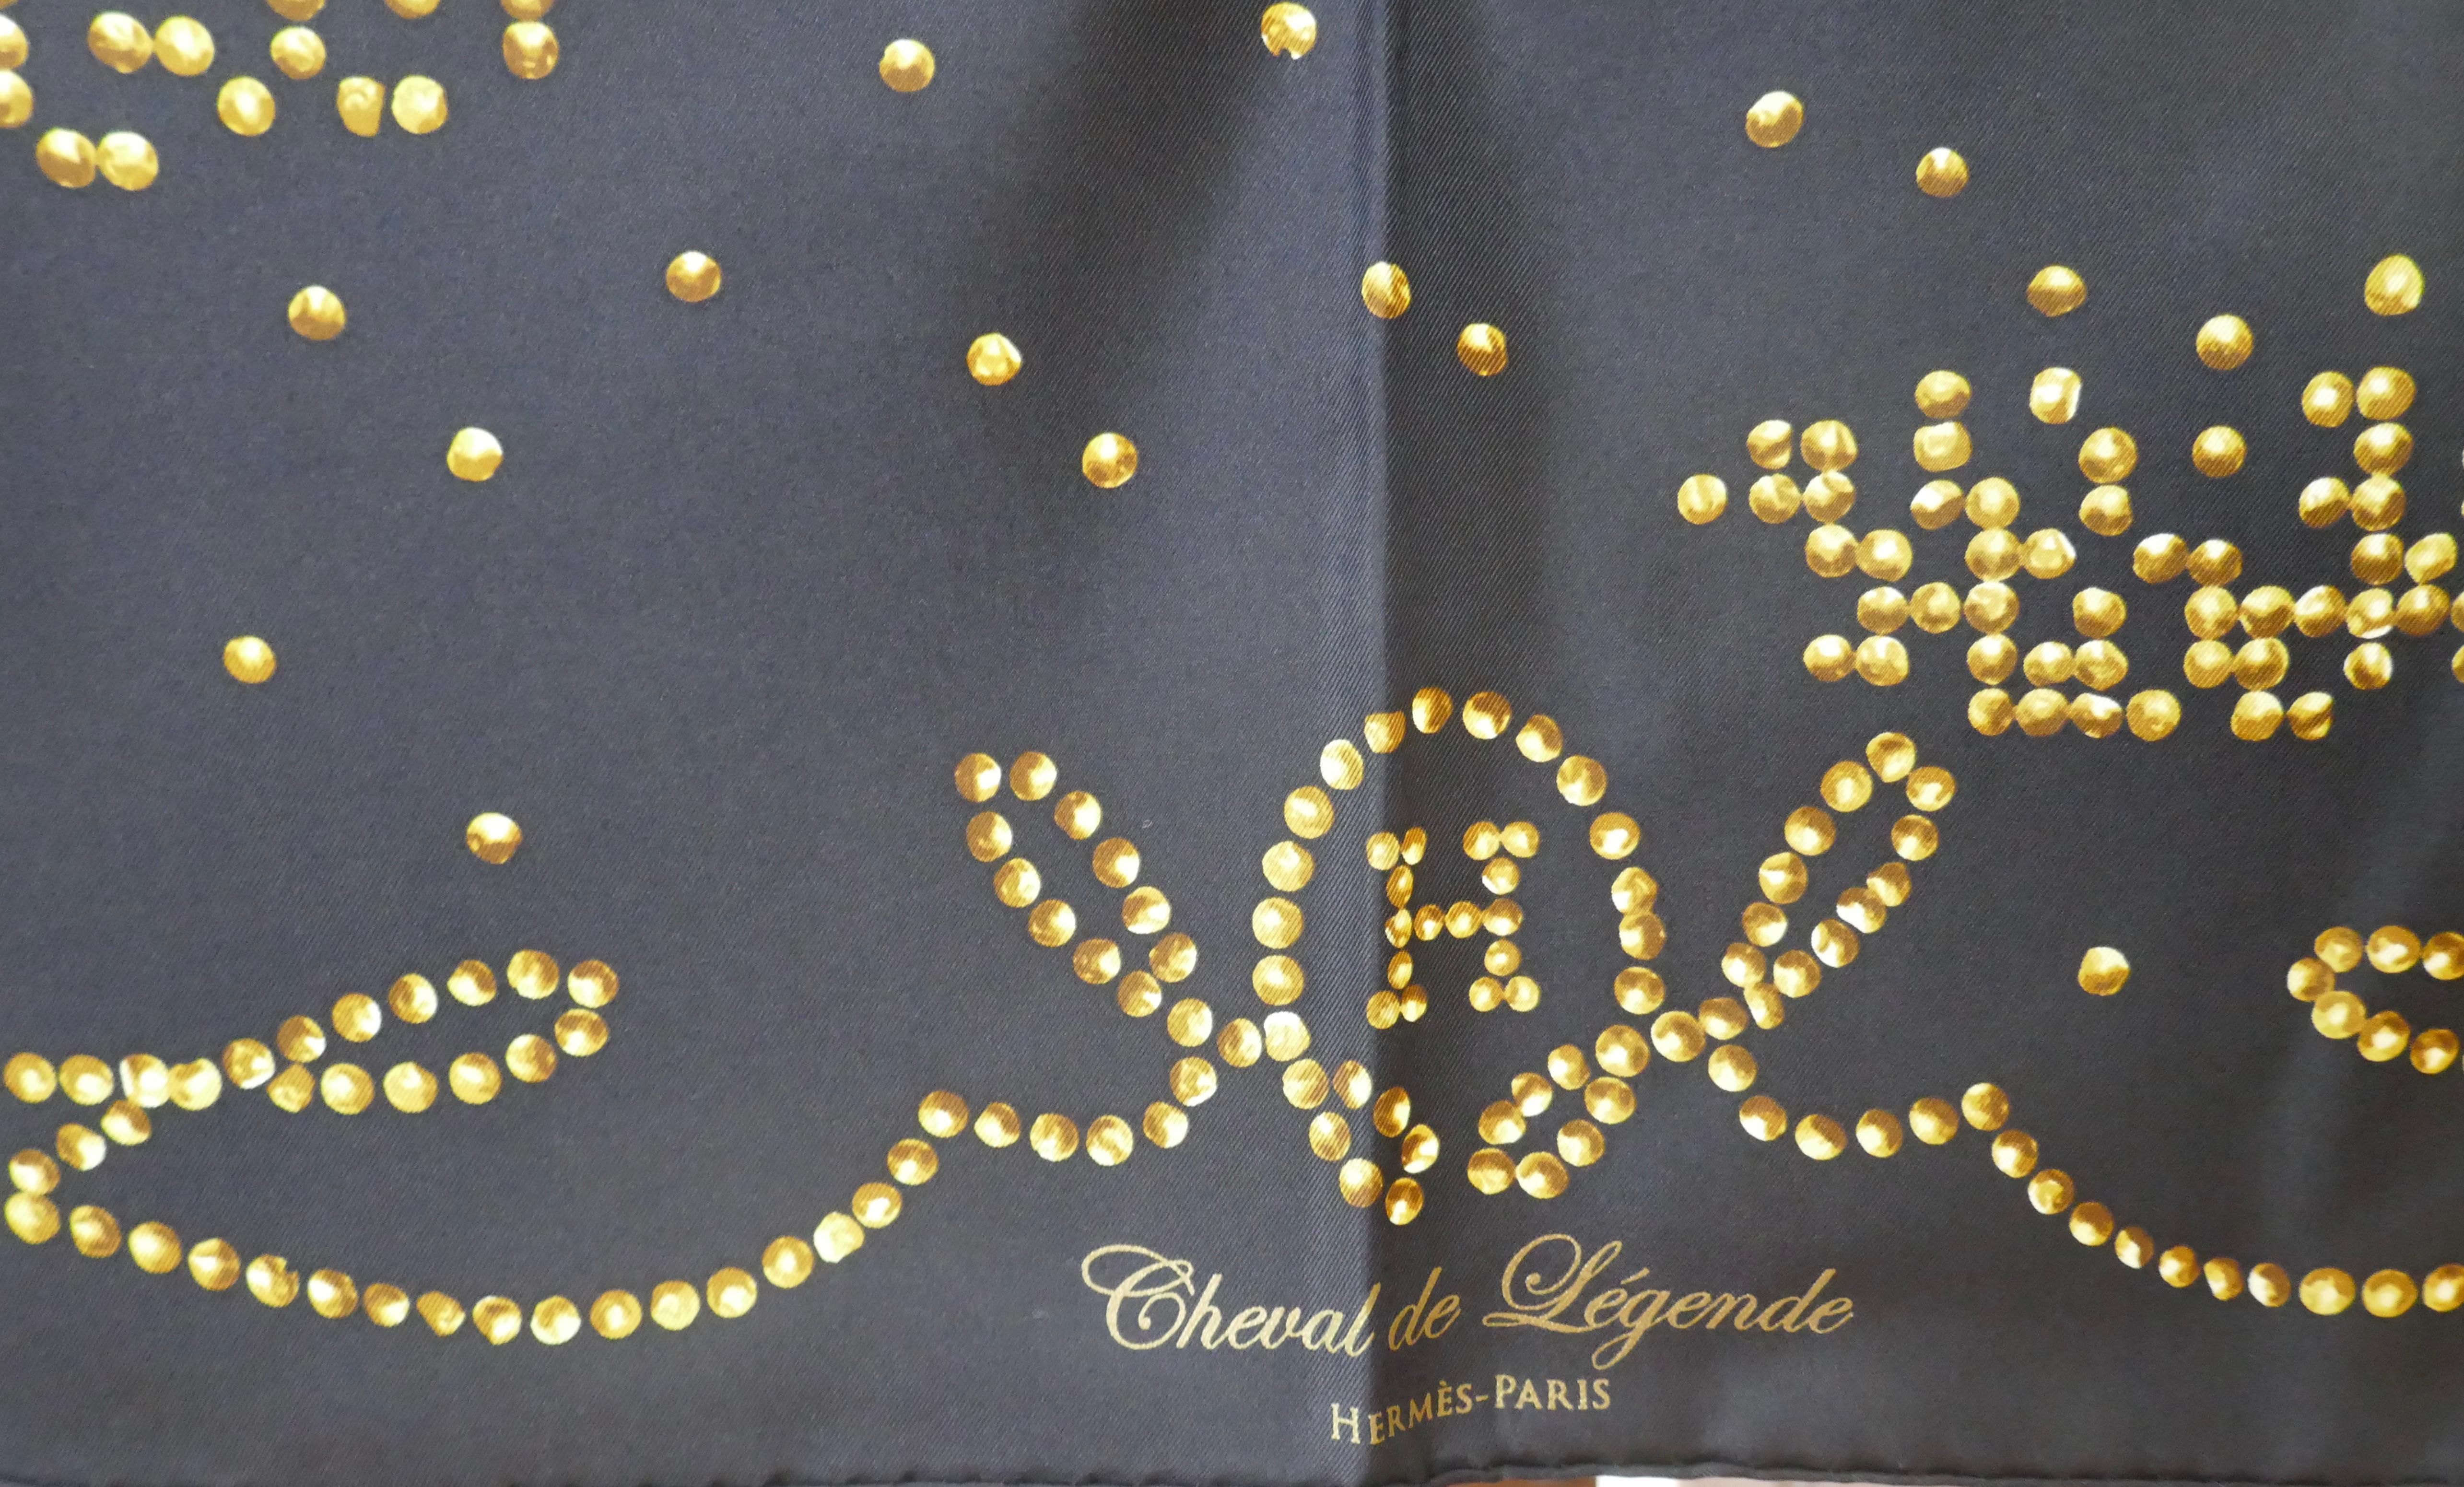 Black Very Rare 2010 Hermes Silk Scarf “ Cheval de Legende” by Benoit Pierre Emery  